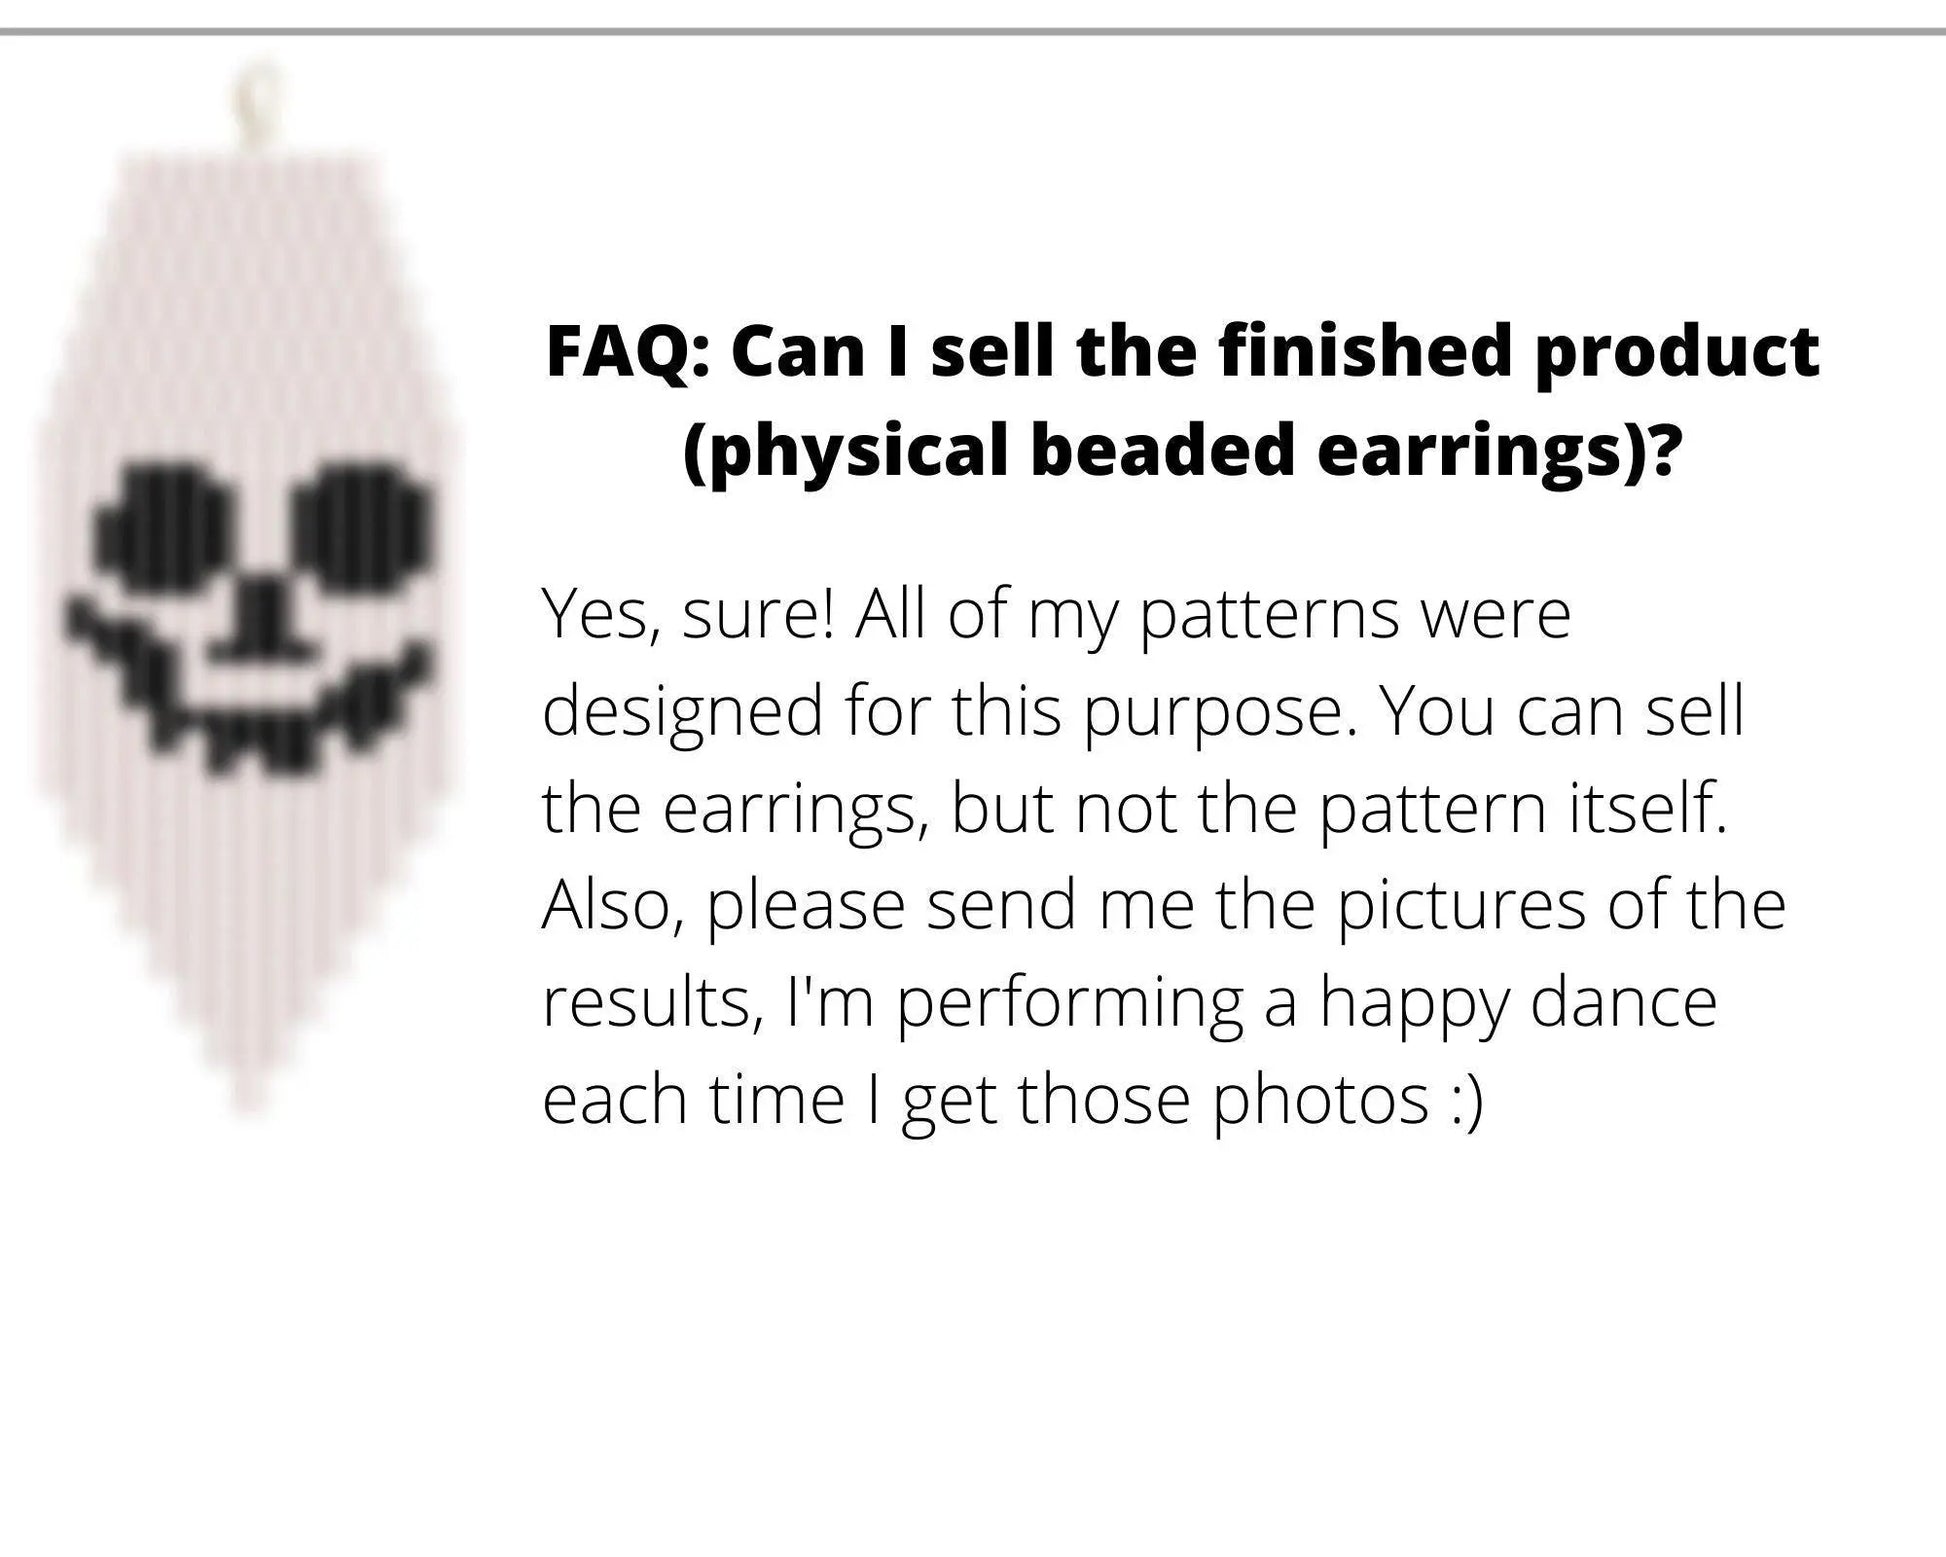 Halloween Skull Brick Stitch pattern for fringe beaded earrings - NikoBeadsUA